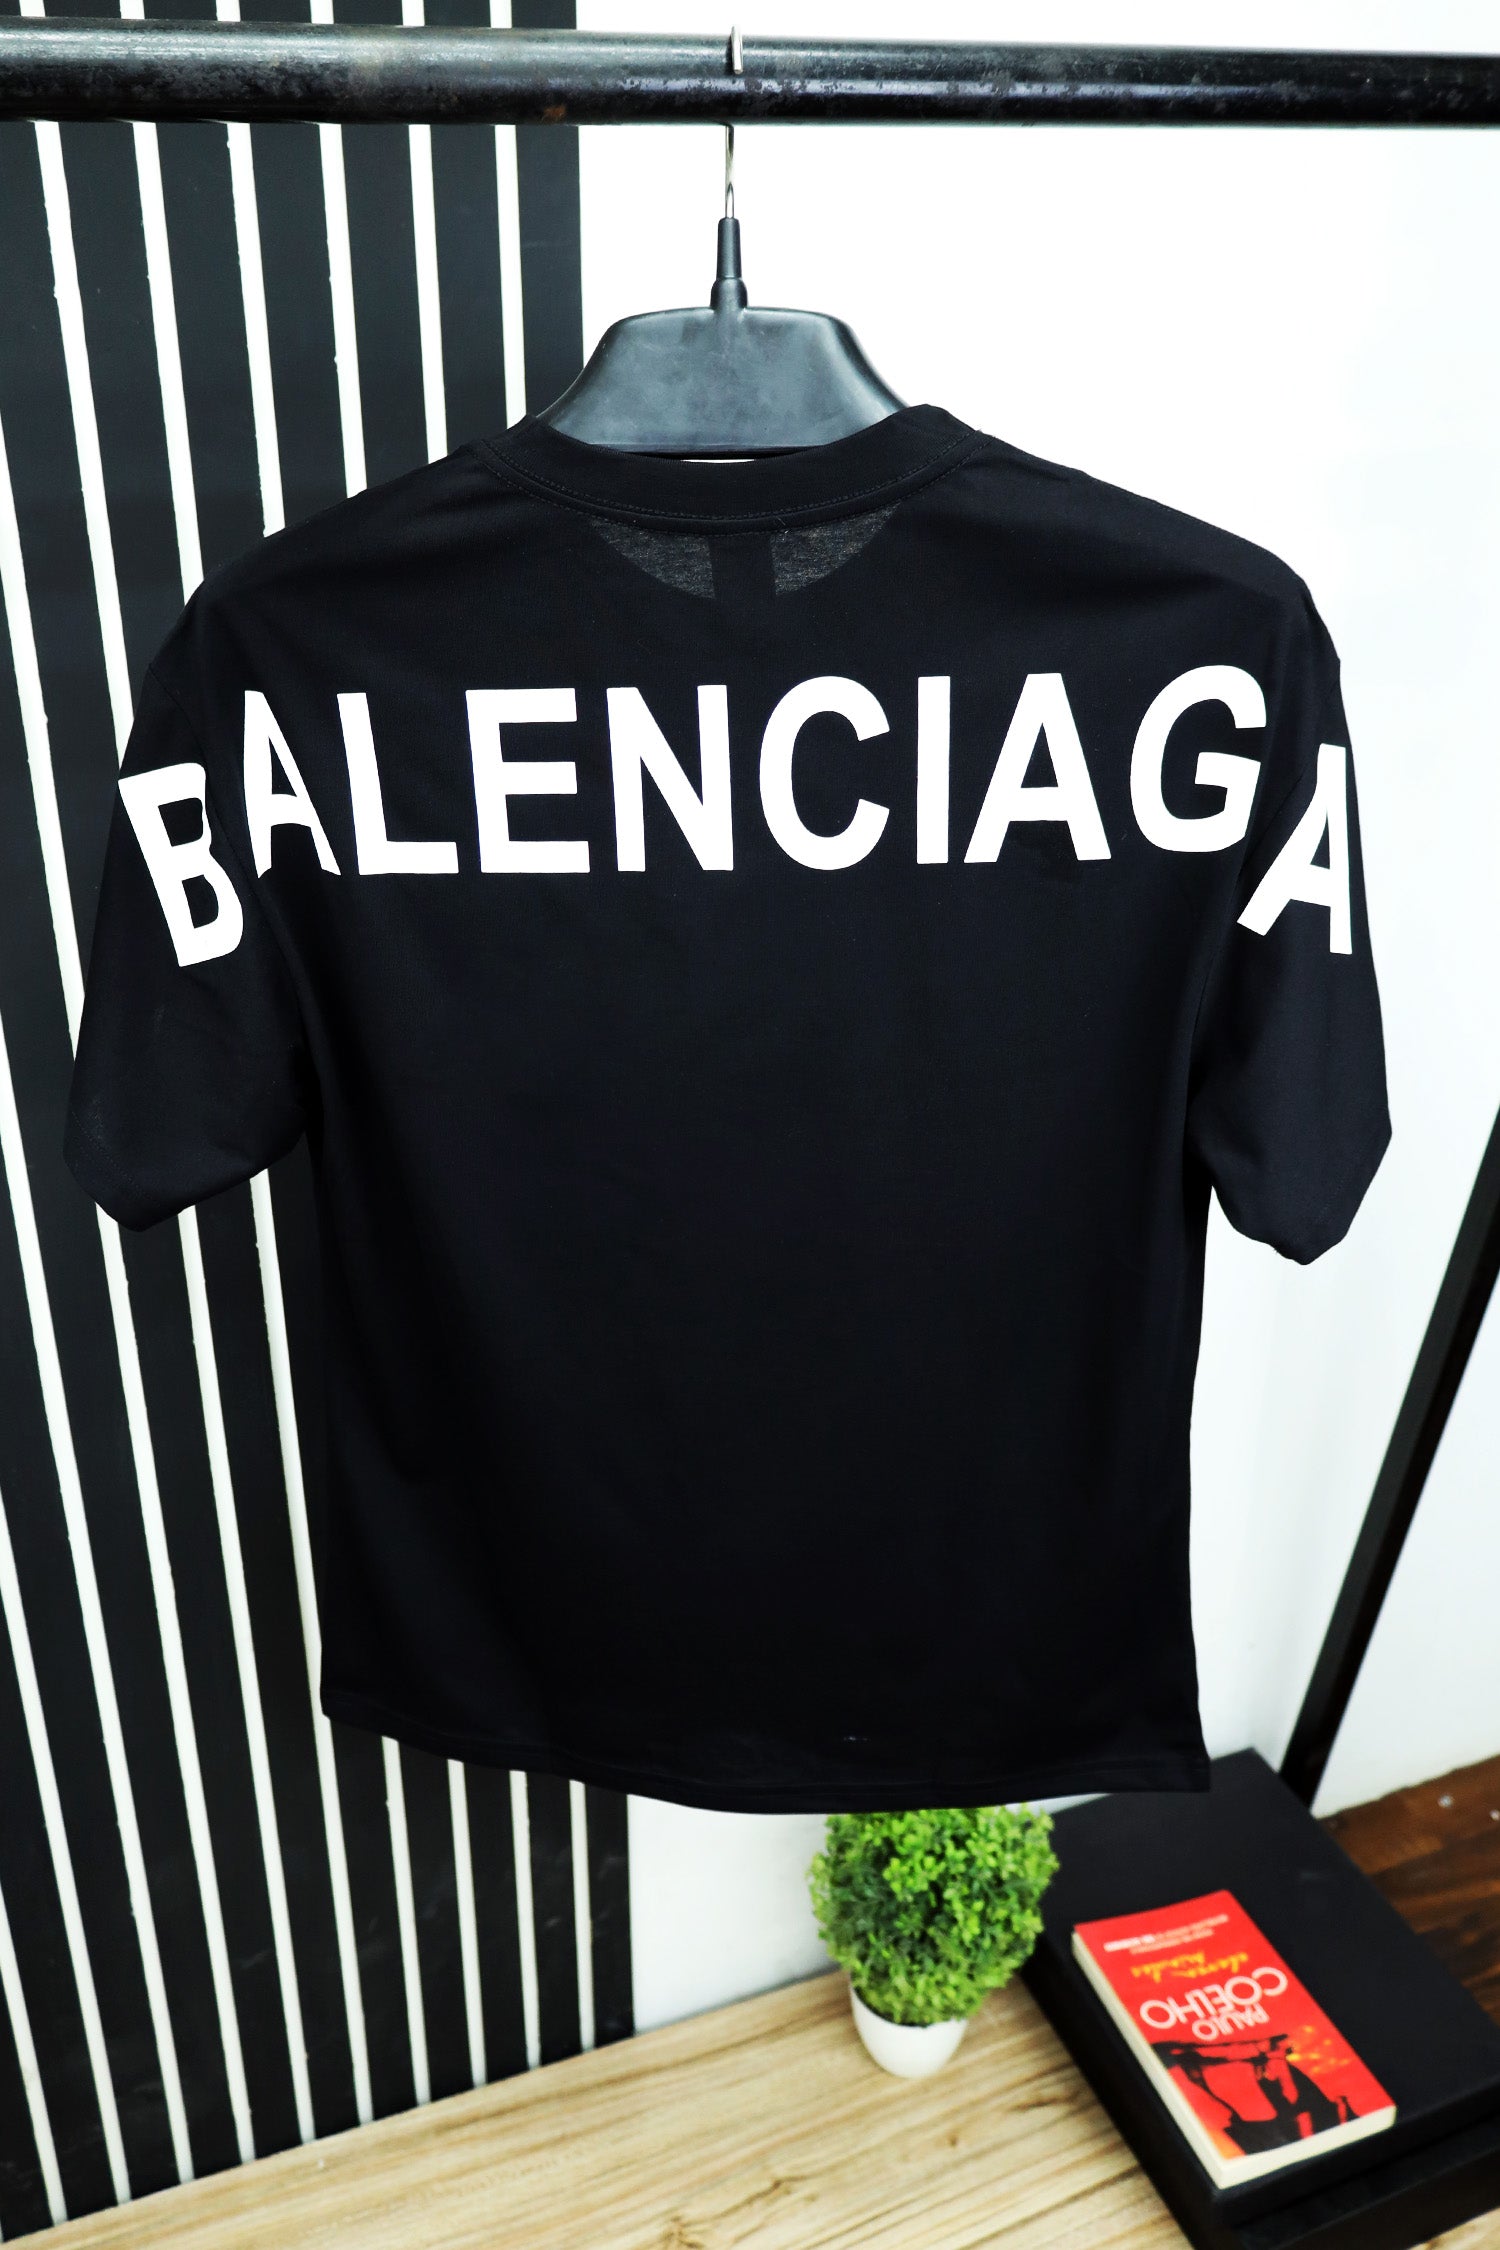 Balnciaga Slogan Oversized T-Shirt